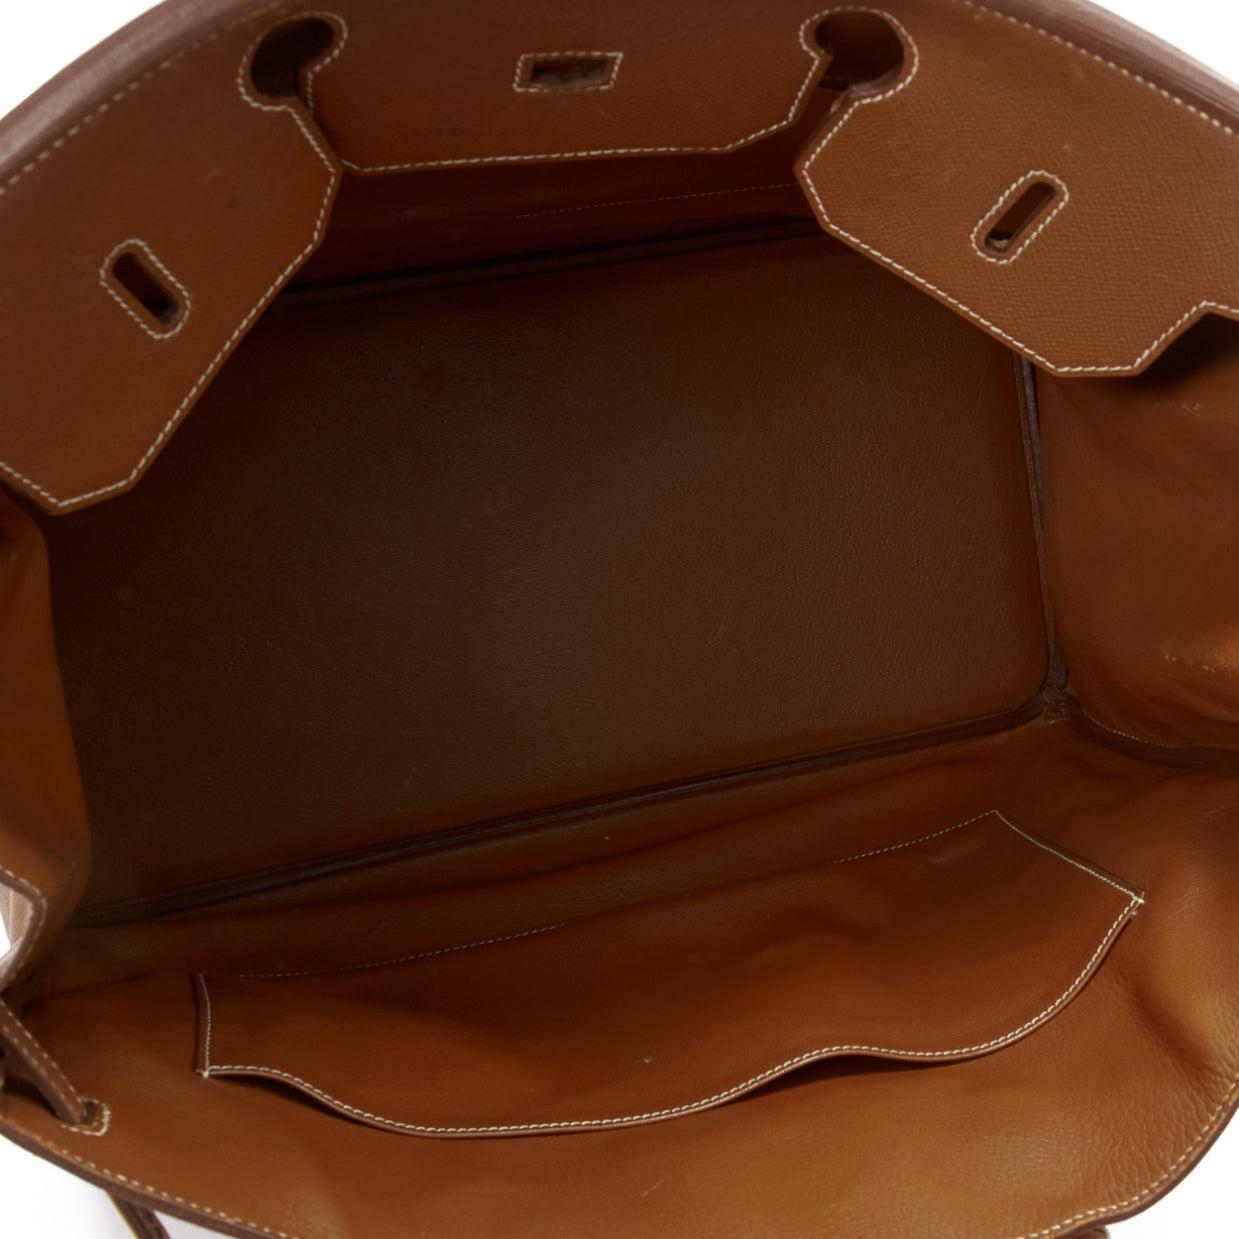 HERMES Birkin 40 Epsom brown leather gold hardware leather tote bag For Sale 7